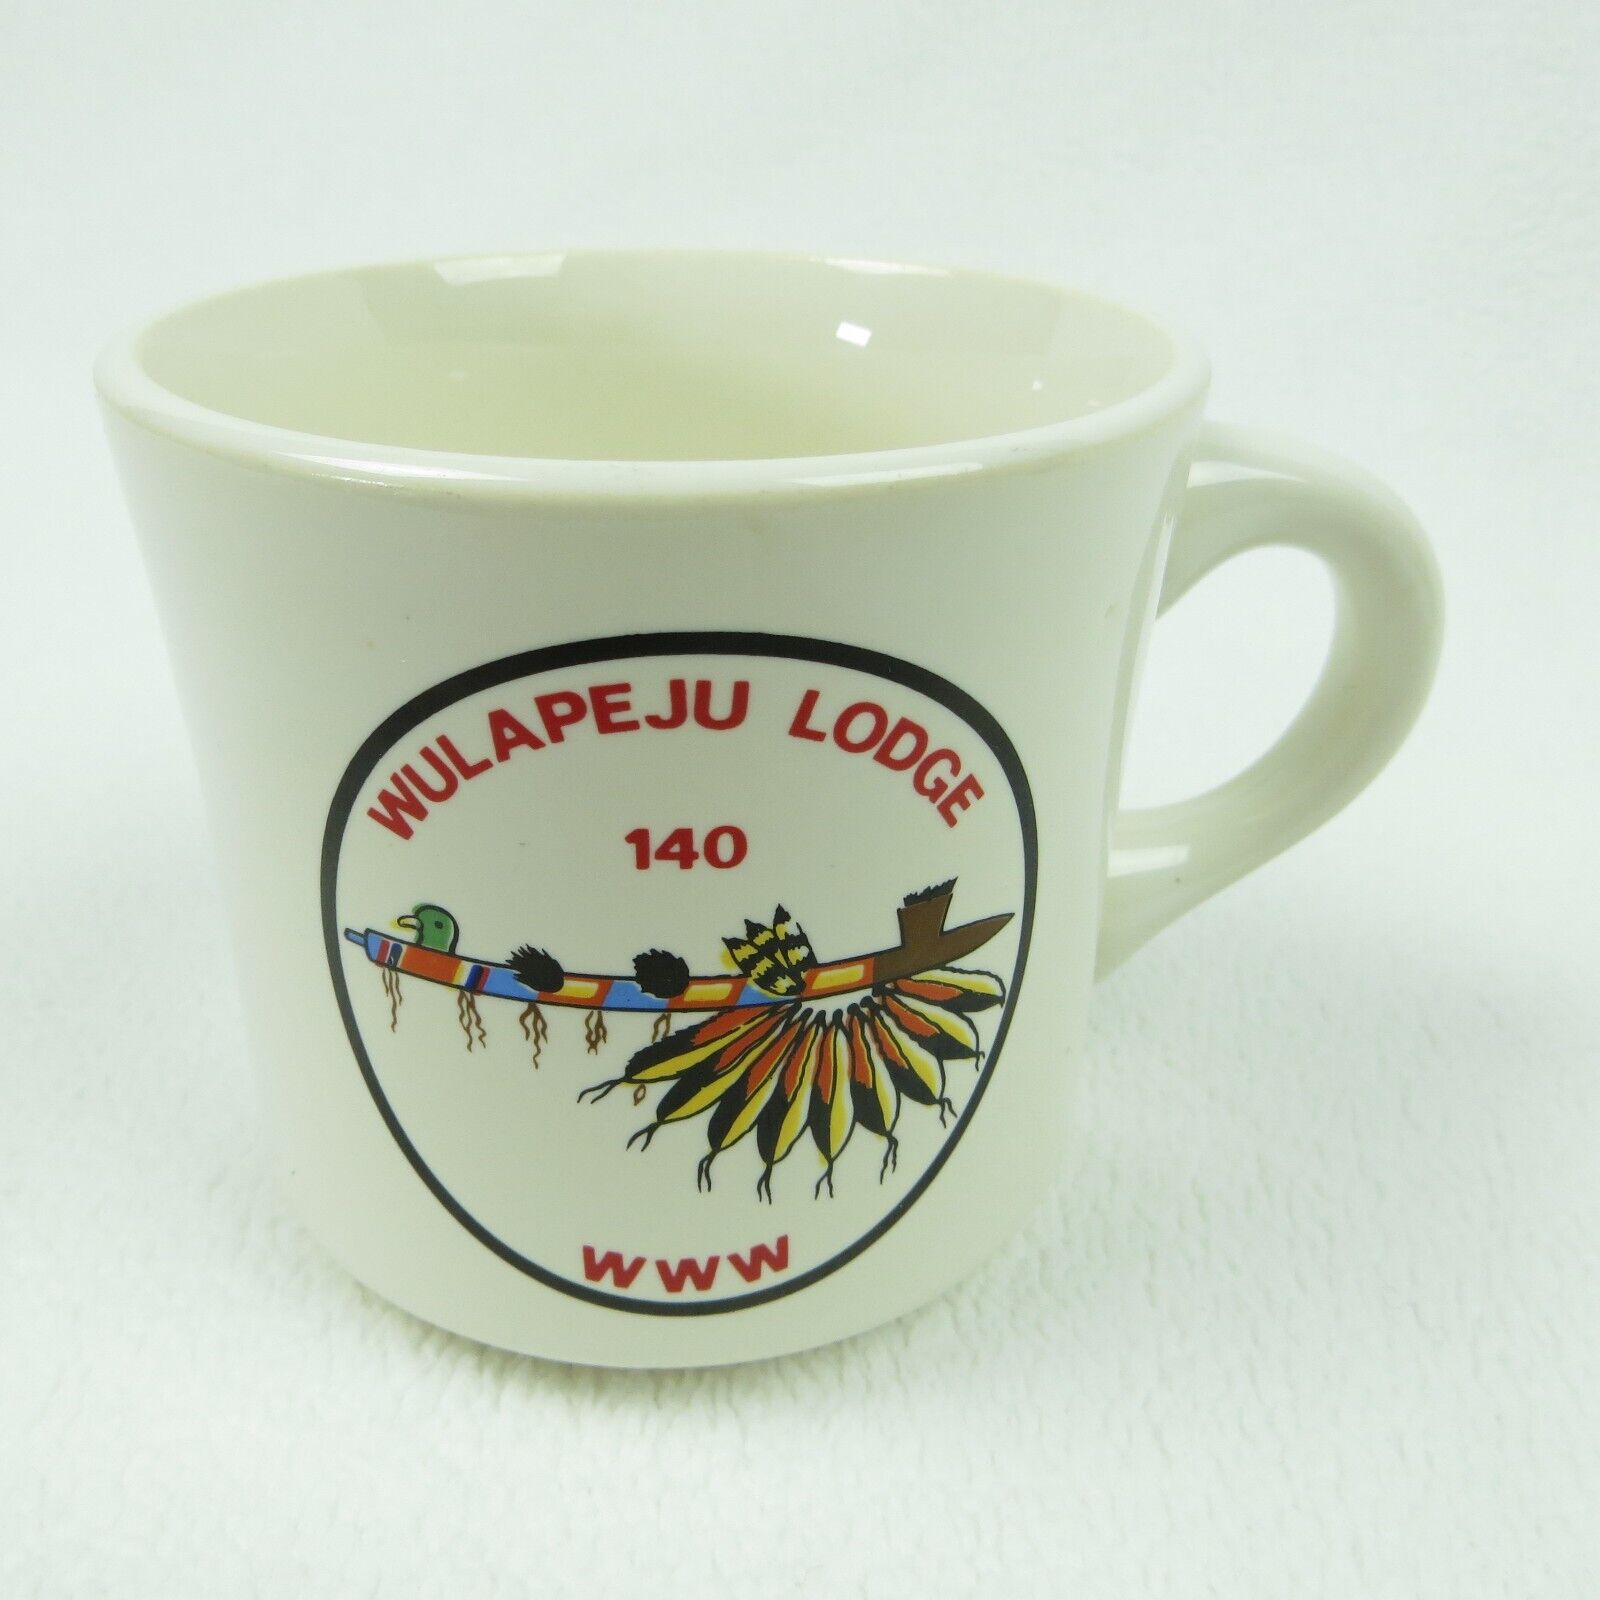 Vintage Wulapeju Lodge 140 WWW Boy Scout Coffee Mug USA